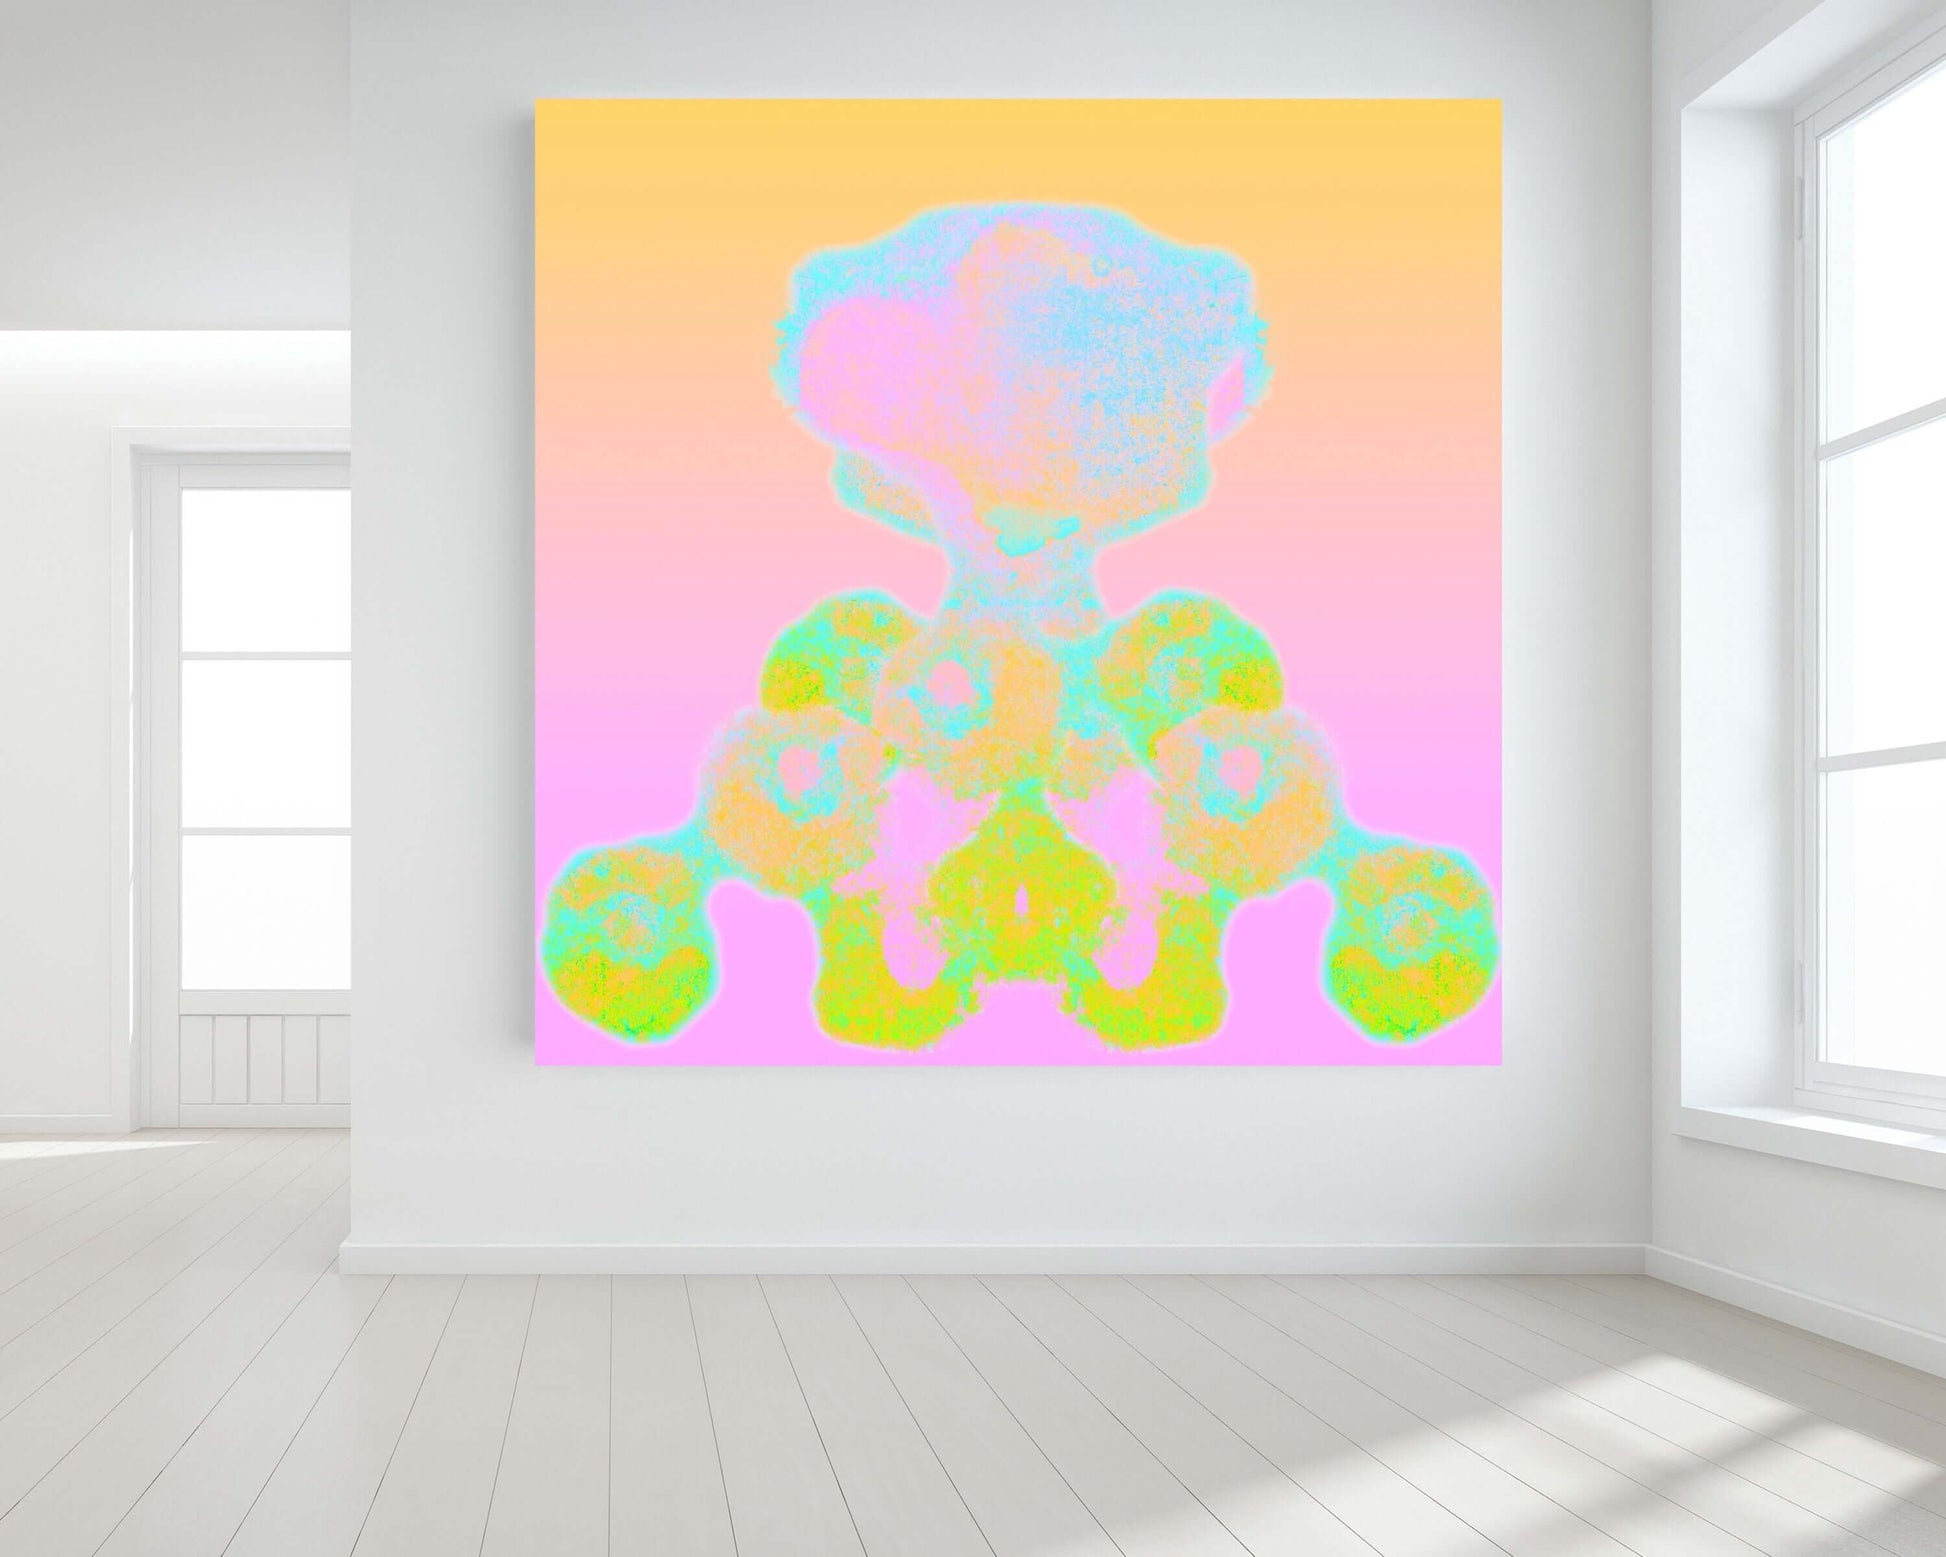 Pastel Atomic Blast “Atomic” Abstract Art Canvas Print Wall Art Large Canvas on Wall